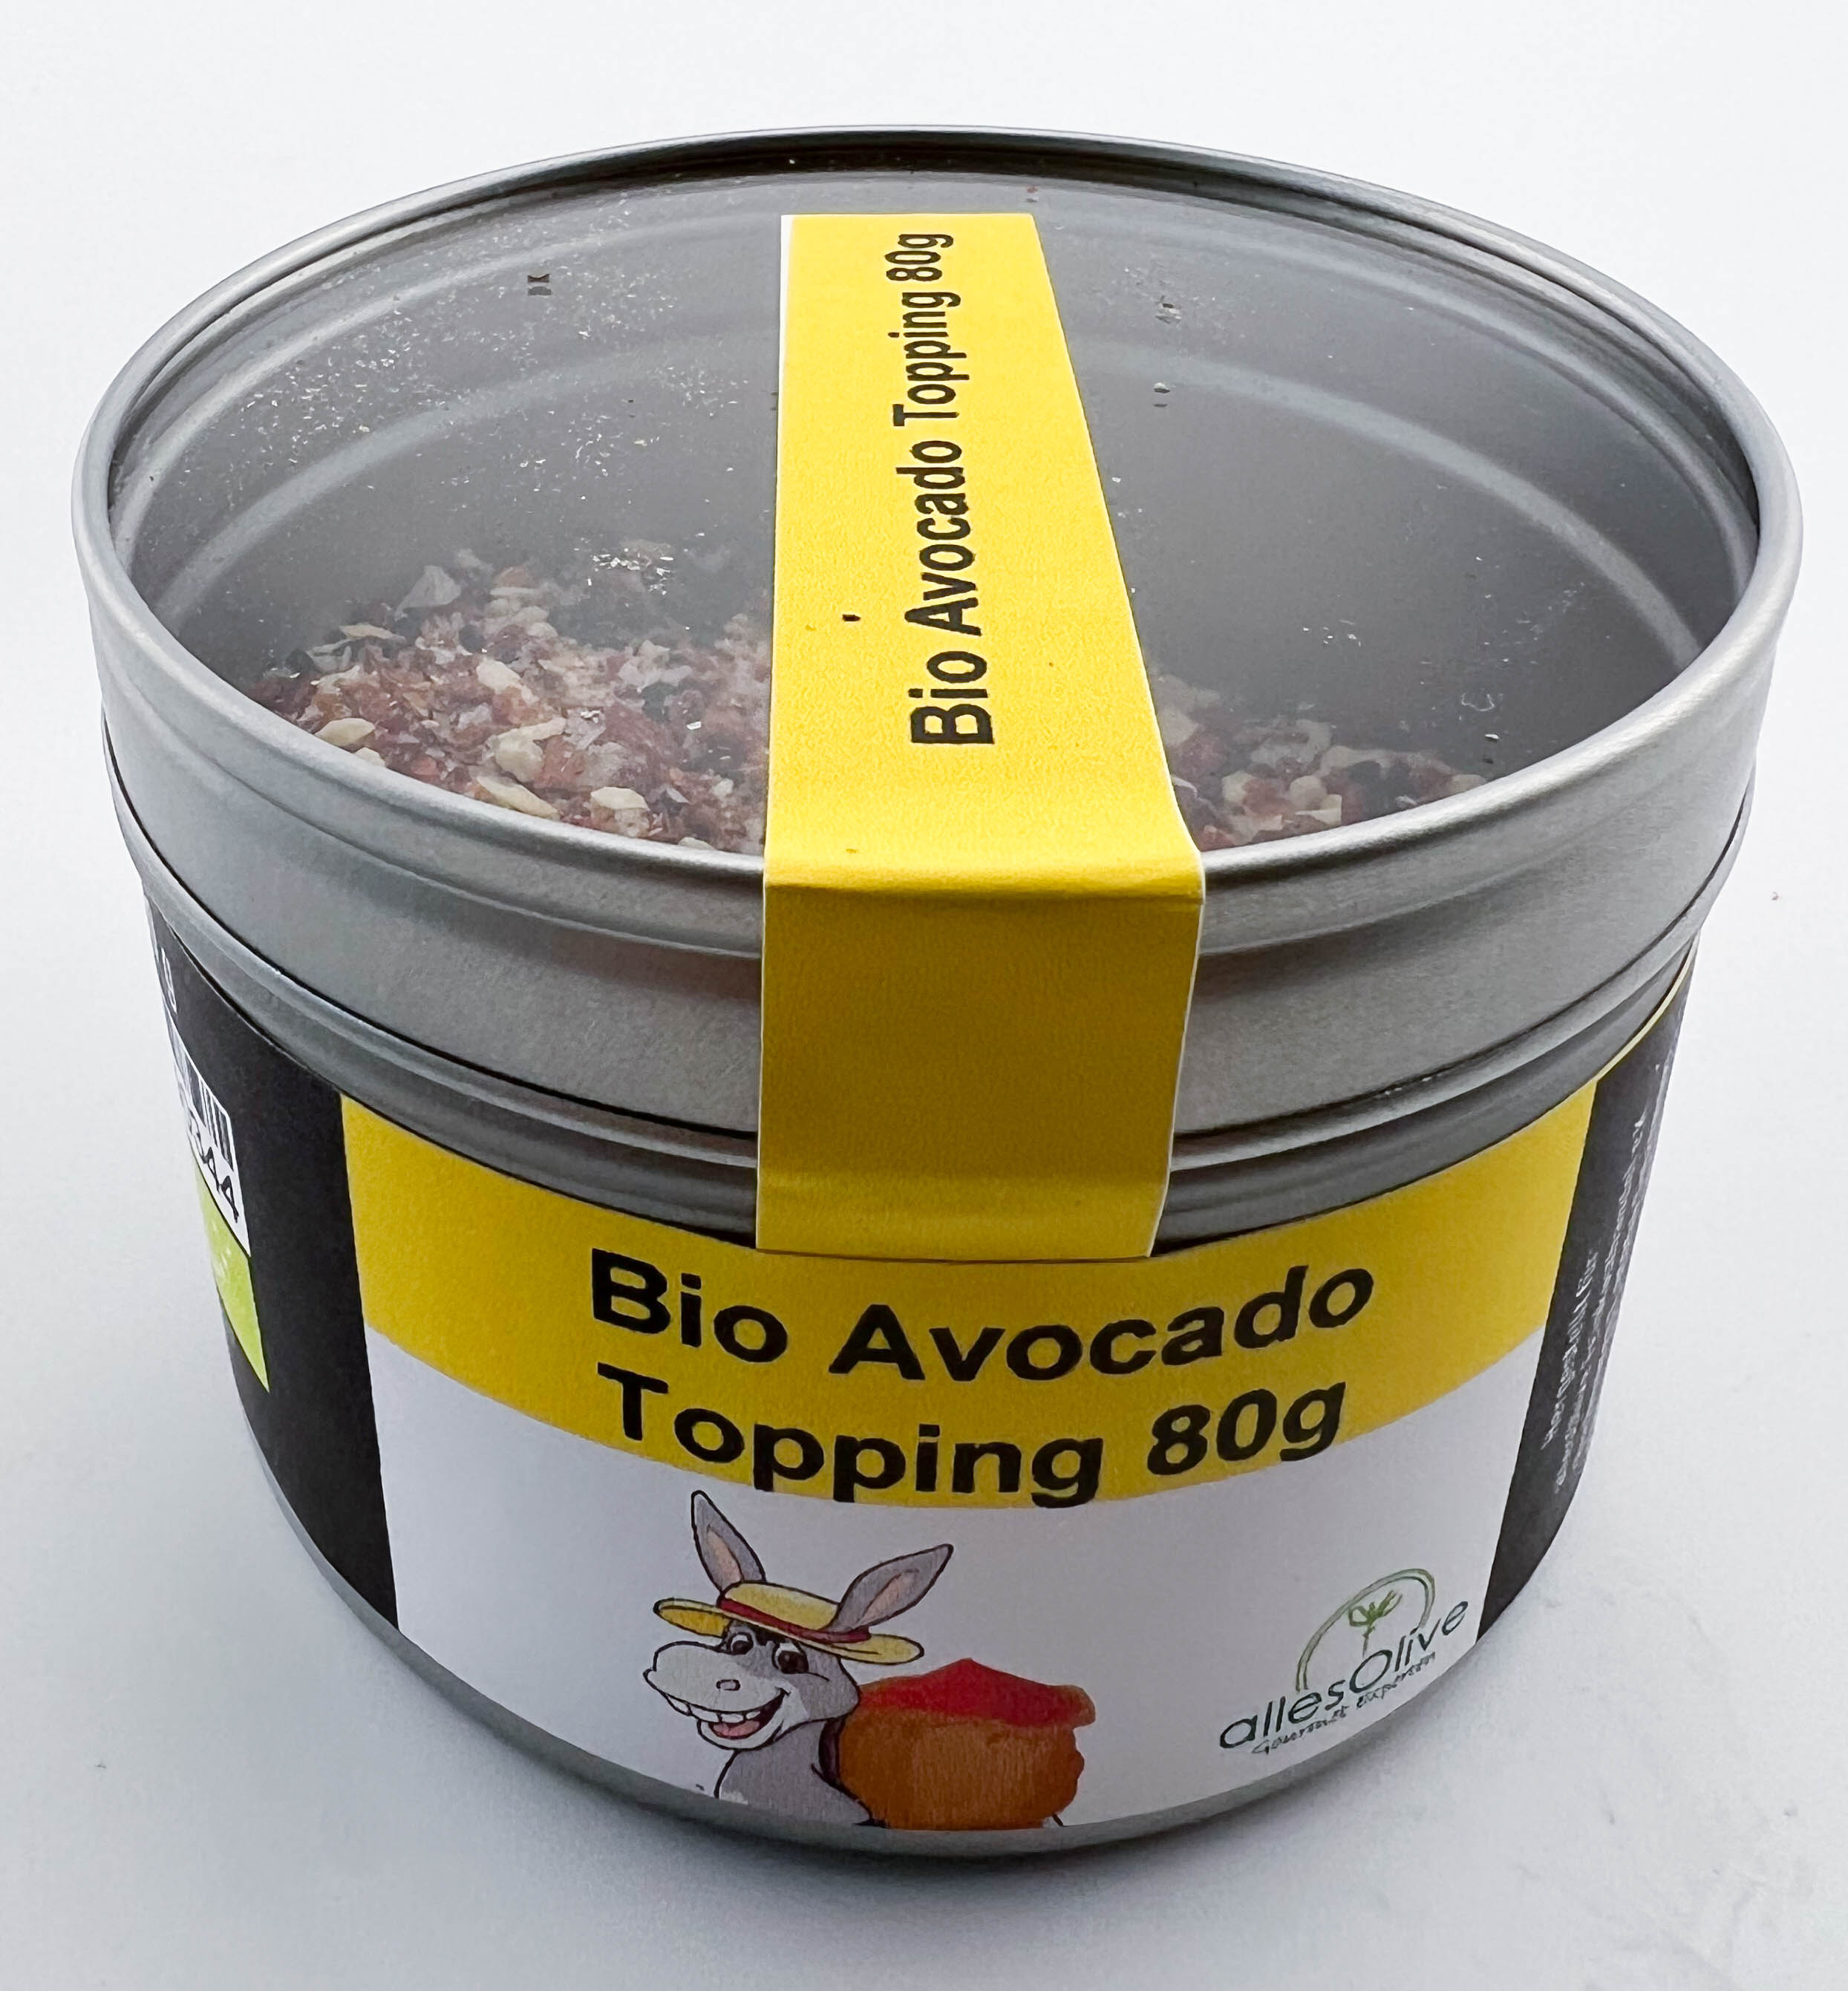 Bio Avocado Topping 80g